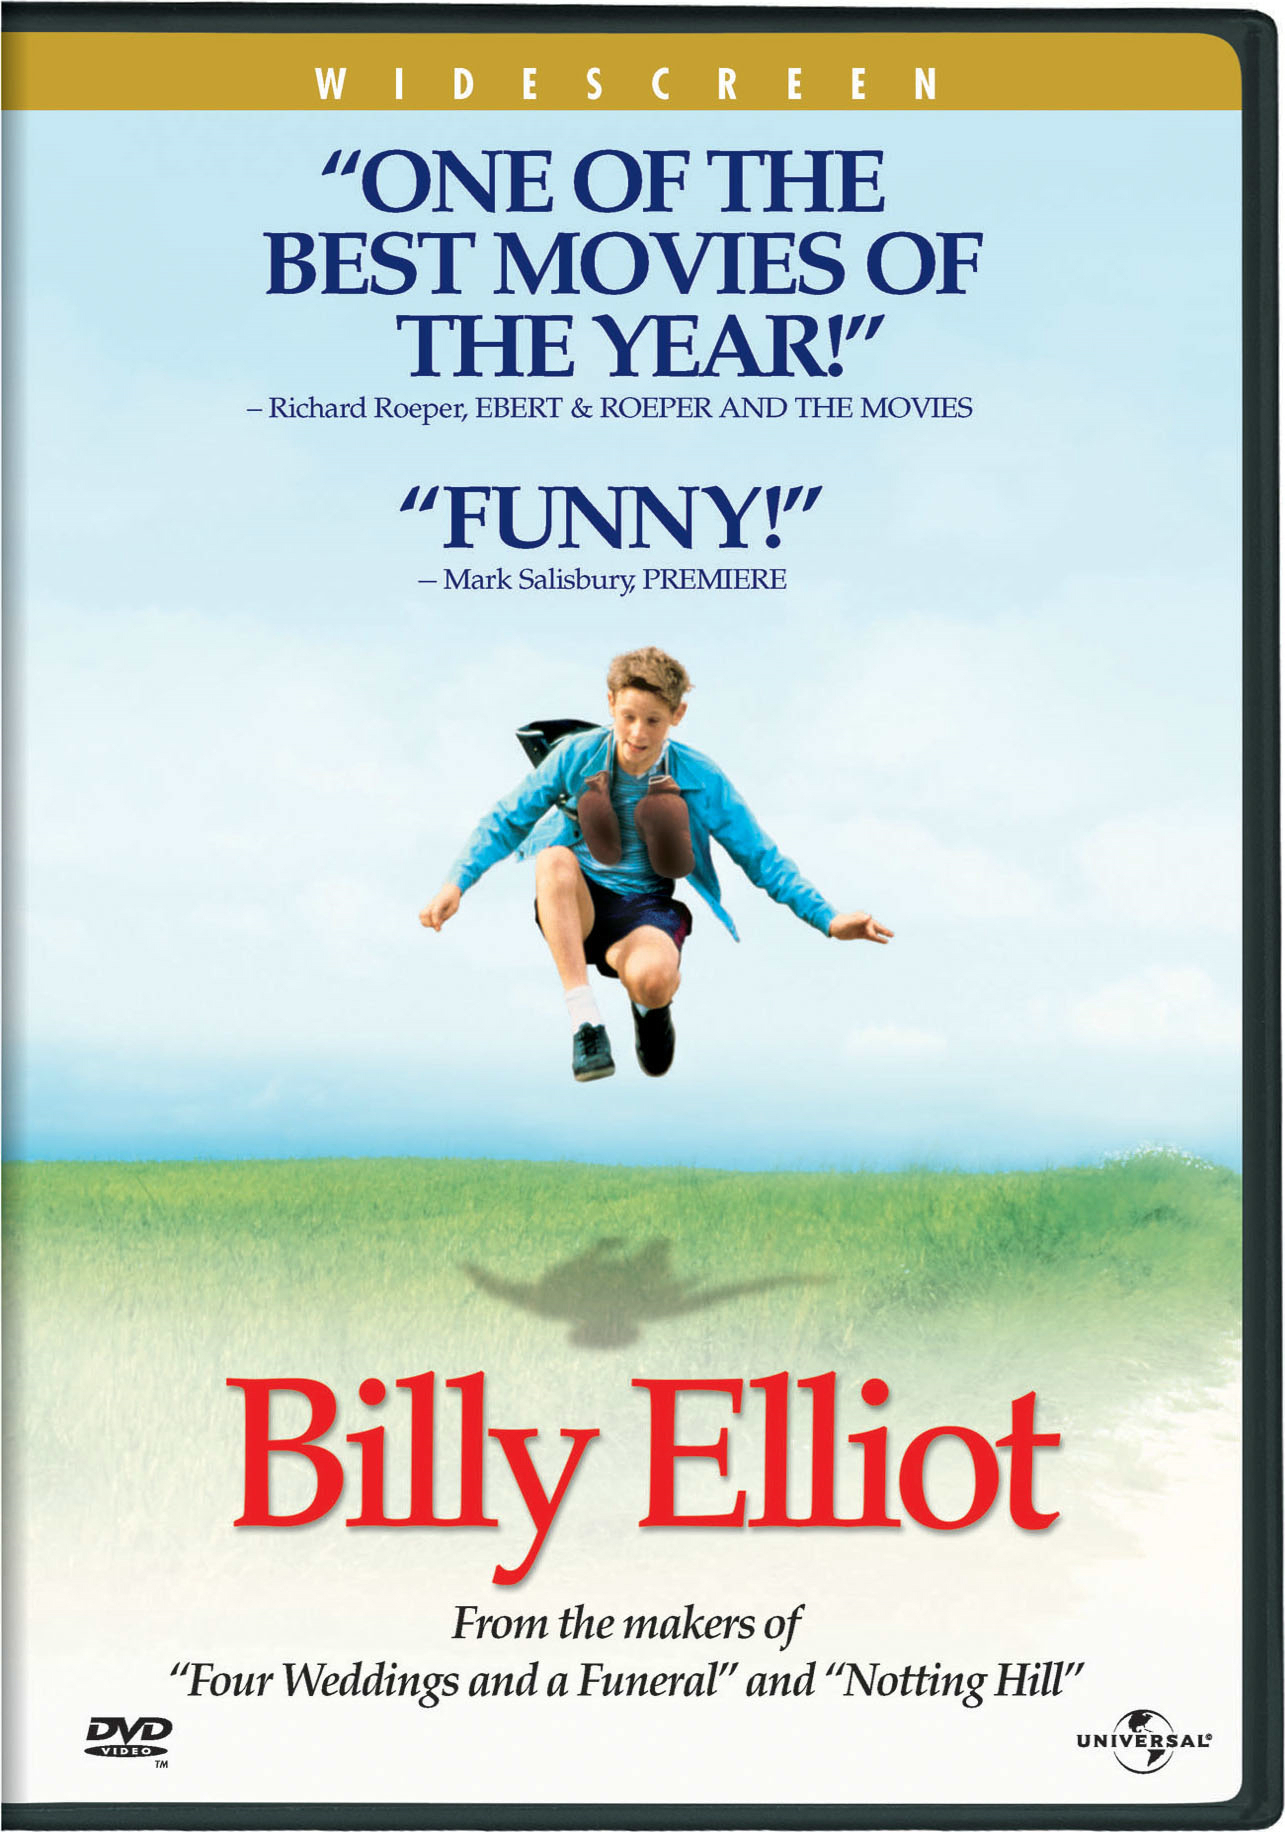 Billy Elliot - DVD [ 2000 ]  - Drama Movies On DVD - Movies On GRUV